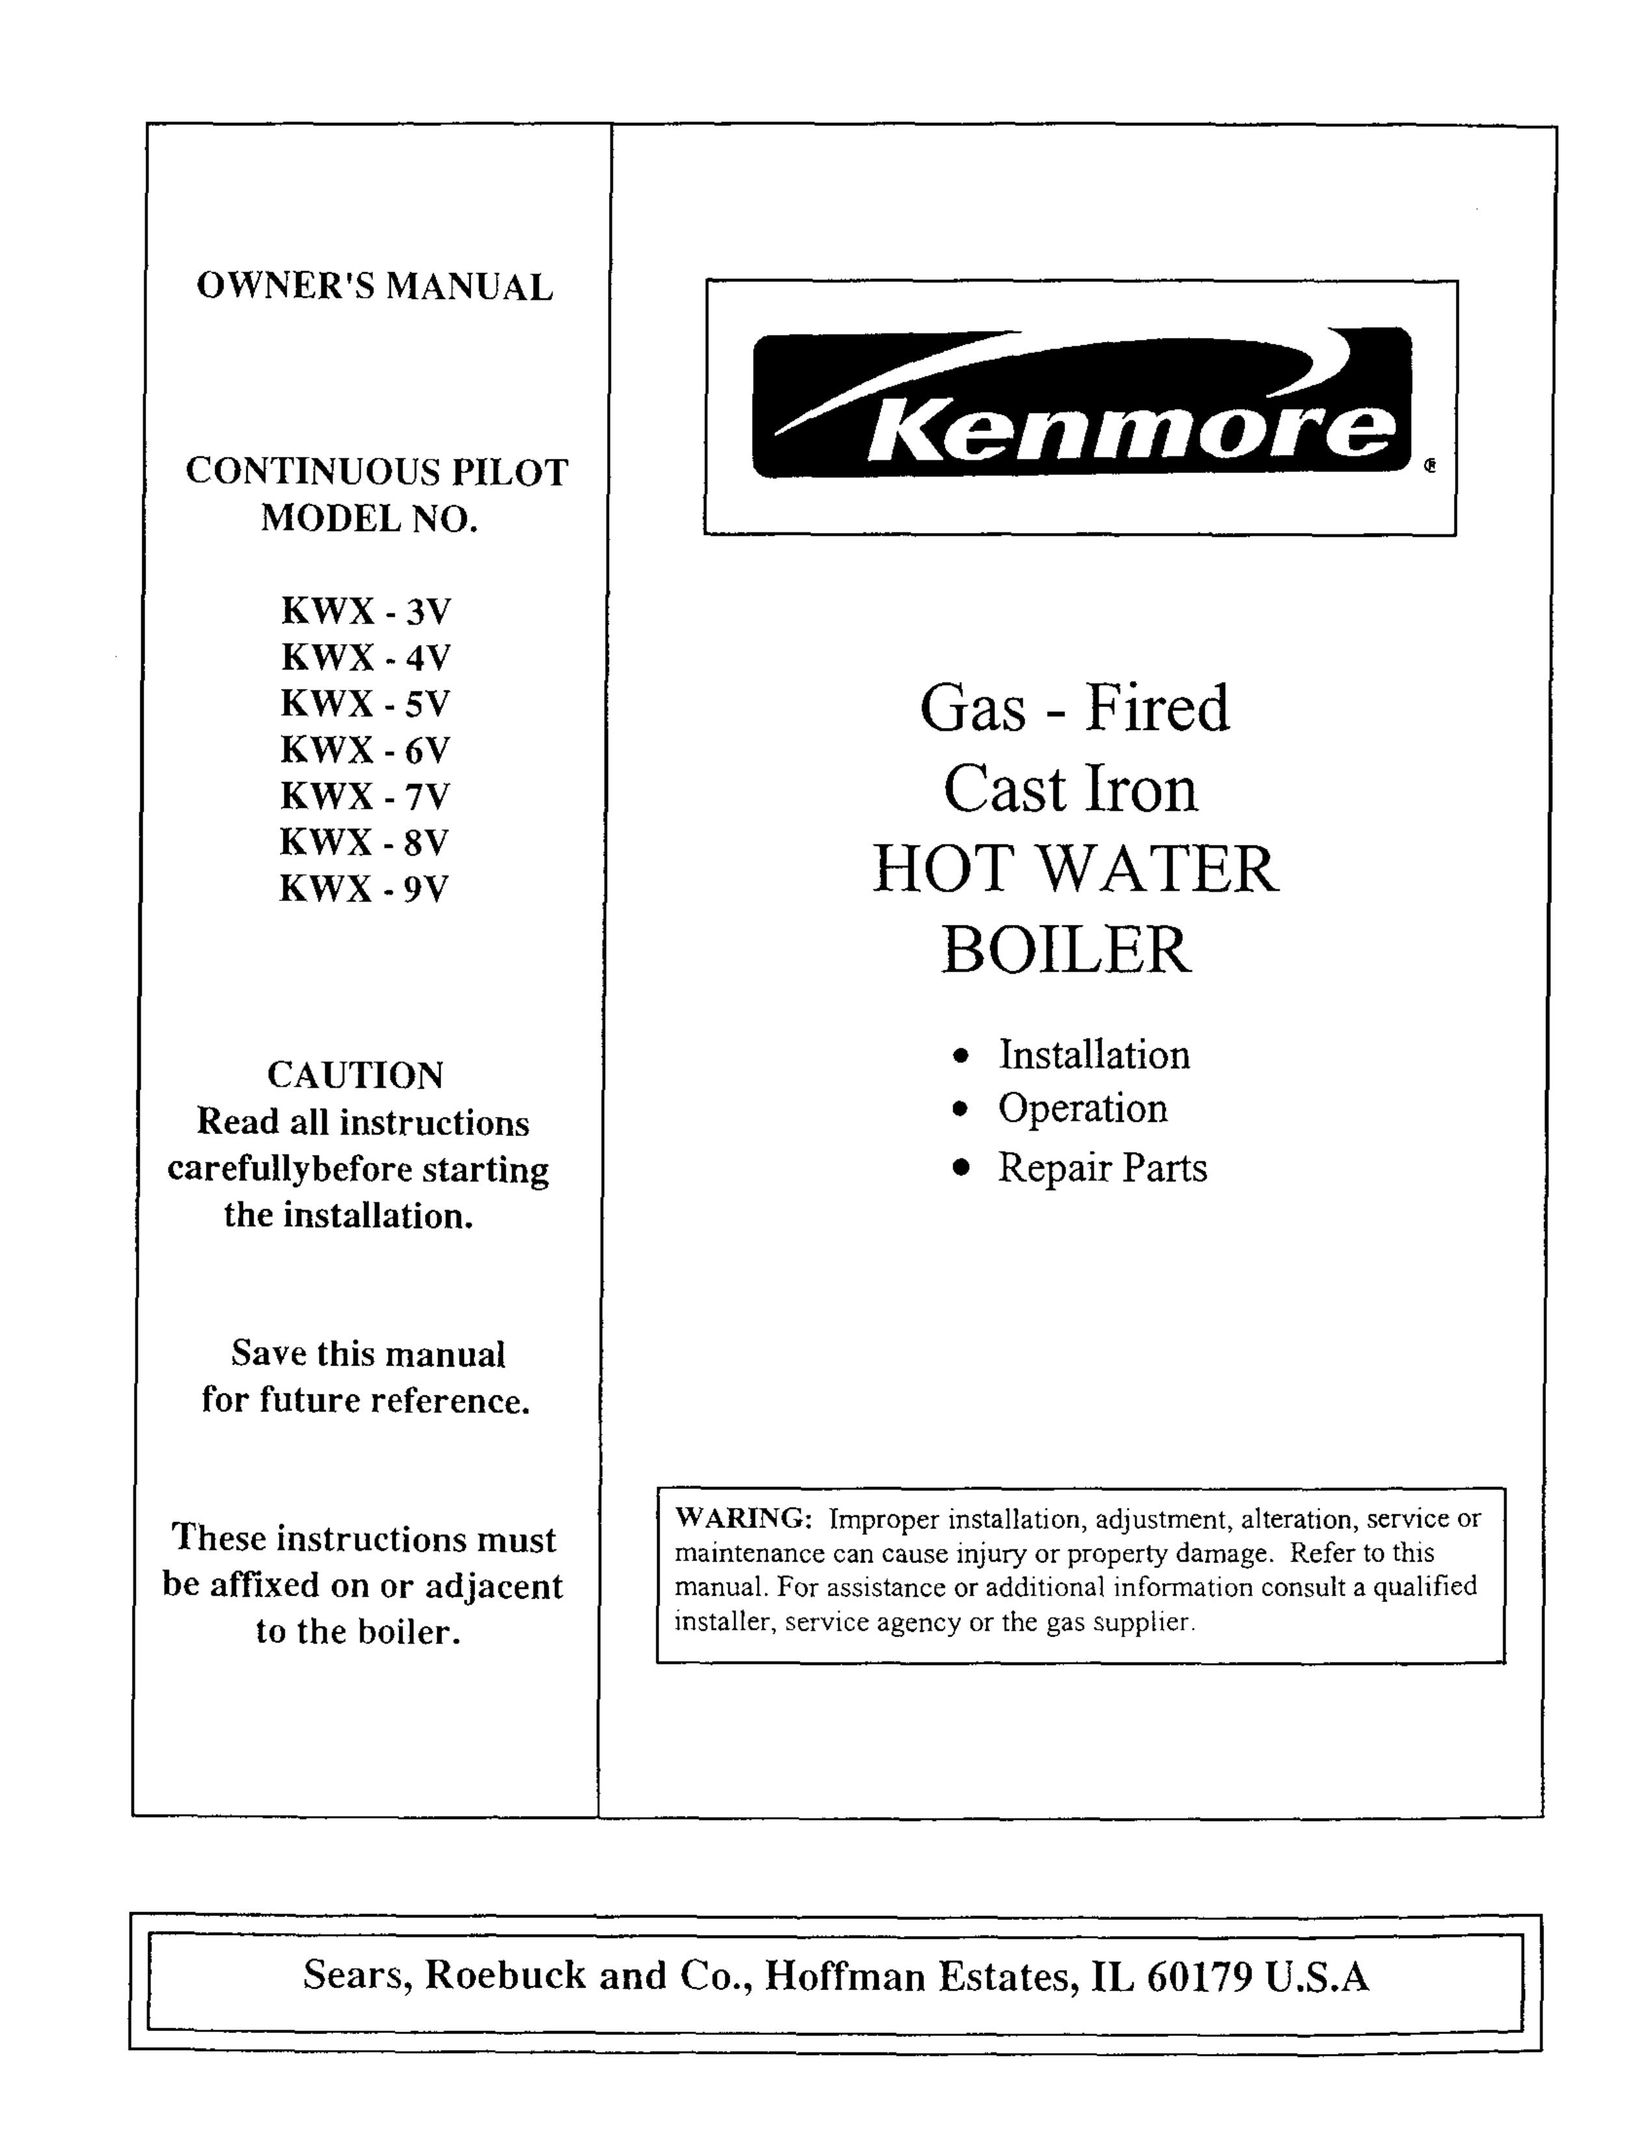 Kenmore KWX - 8V Boiler User Manual